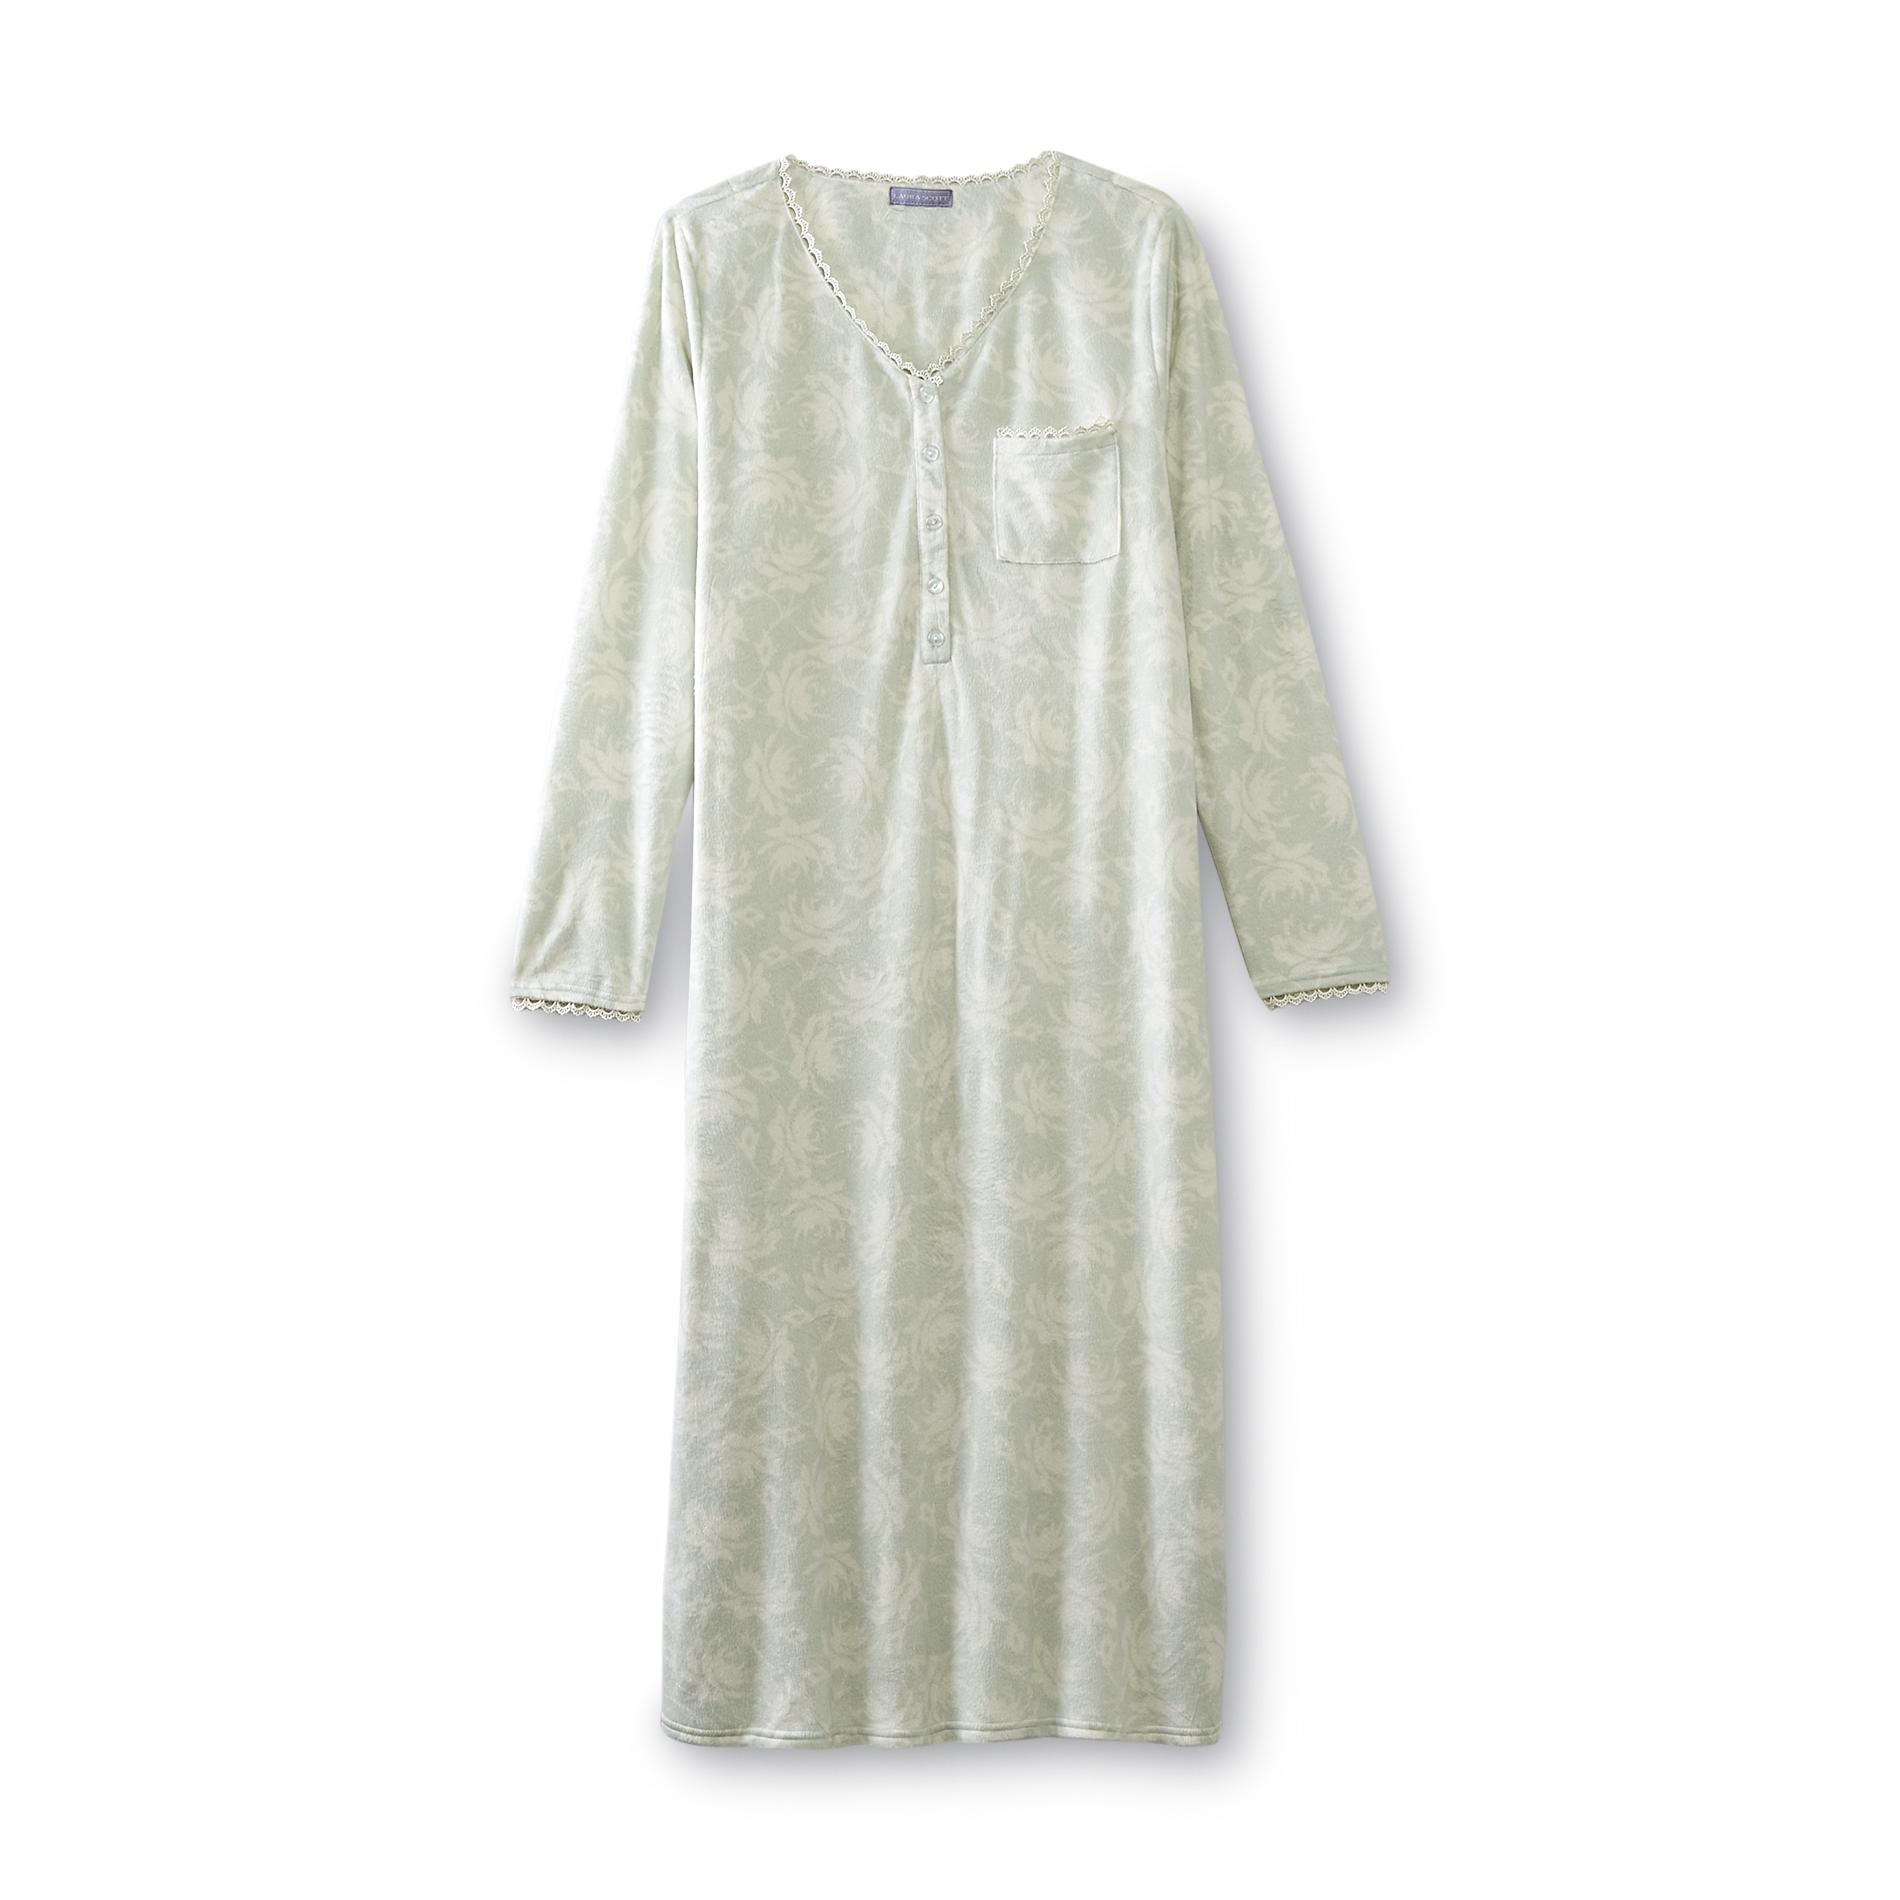 Laura Scott Women's Microfleece Nightgown - Floral